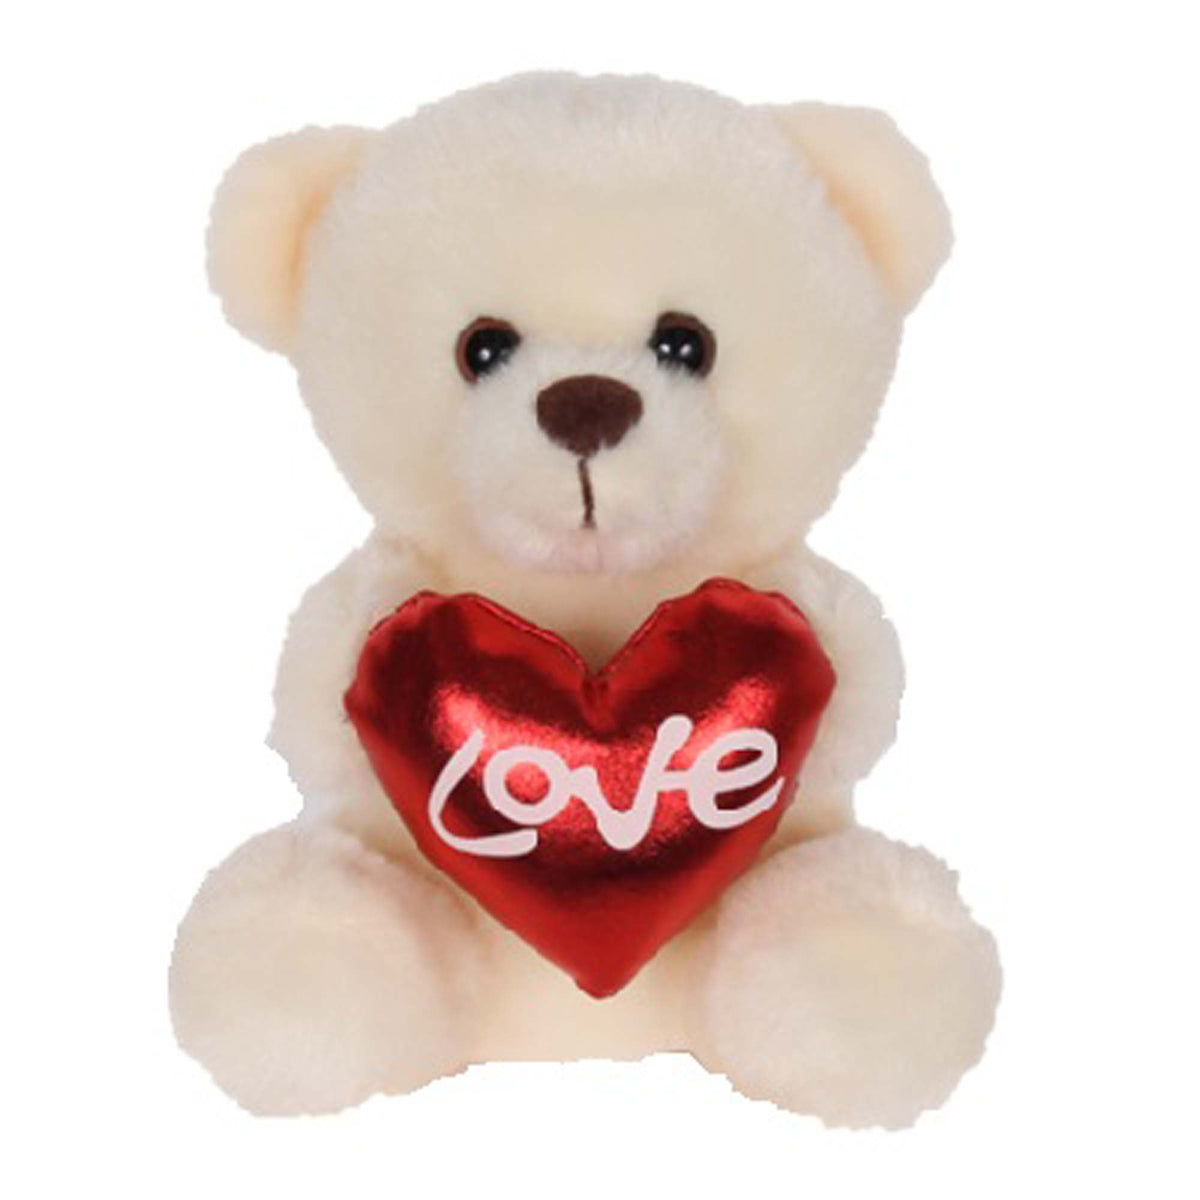 BB TOYMAKER Valentine's Day Cream Love Bear Plush, 5 Inches, 1 Count